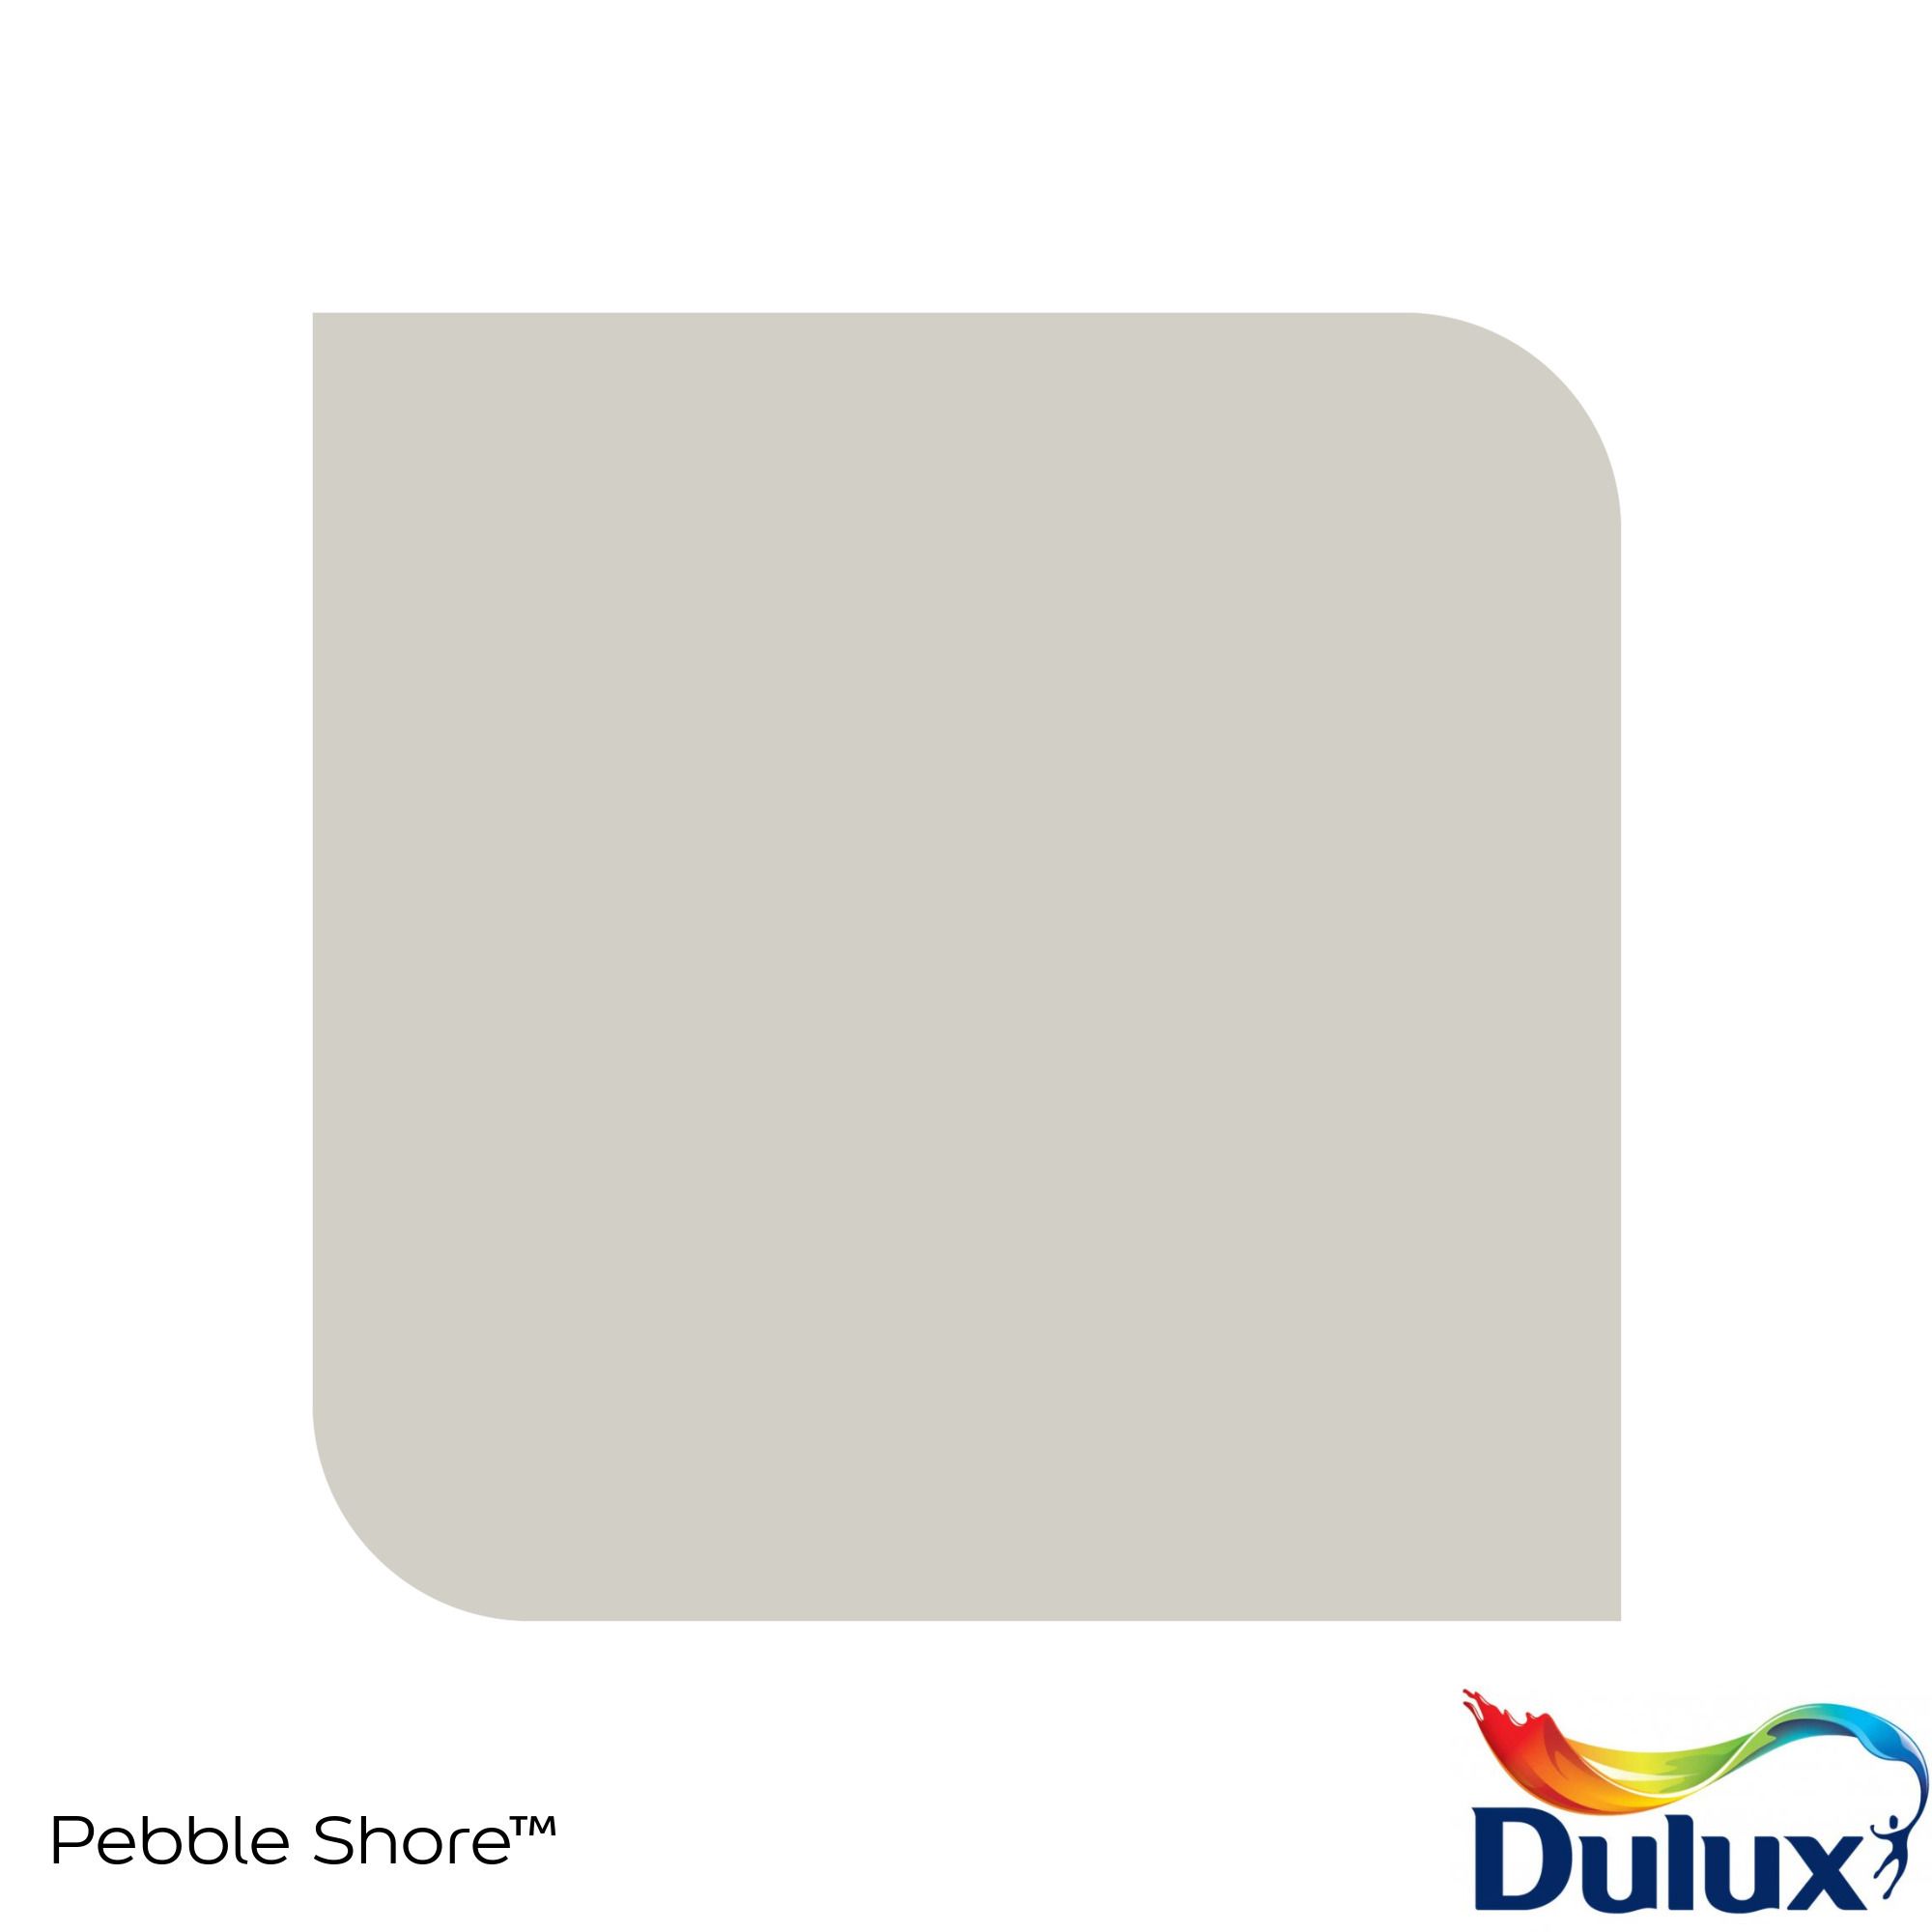 Dulux Standard Pebble shore Matt Emulsion paint, 30ml Tester pot